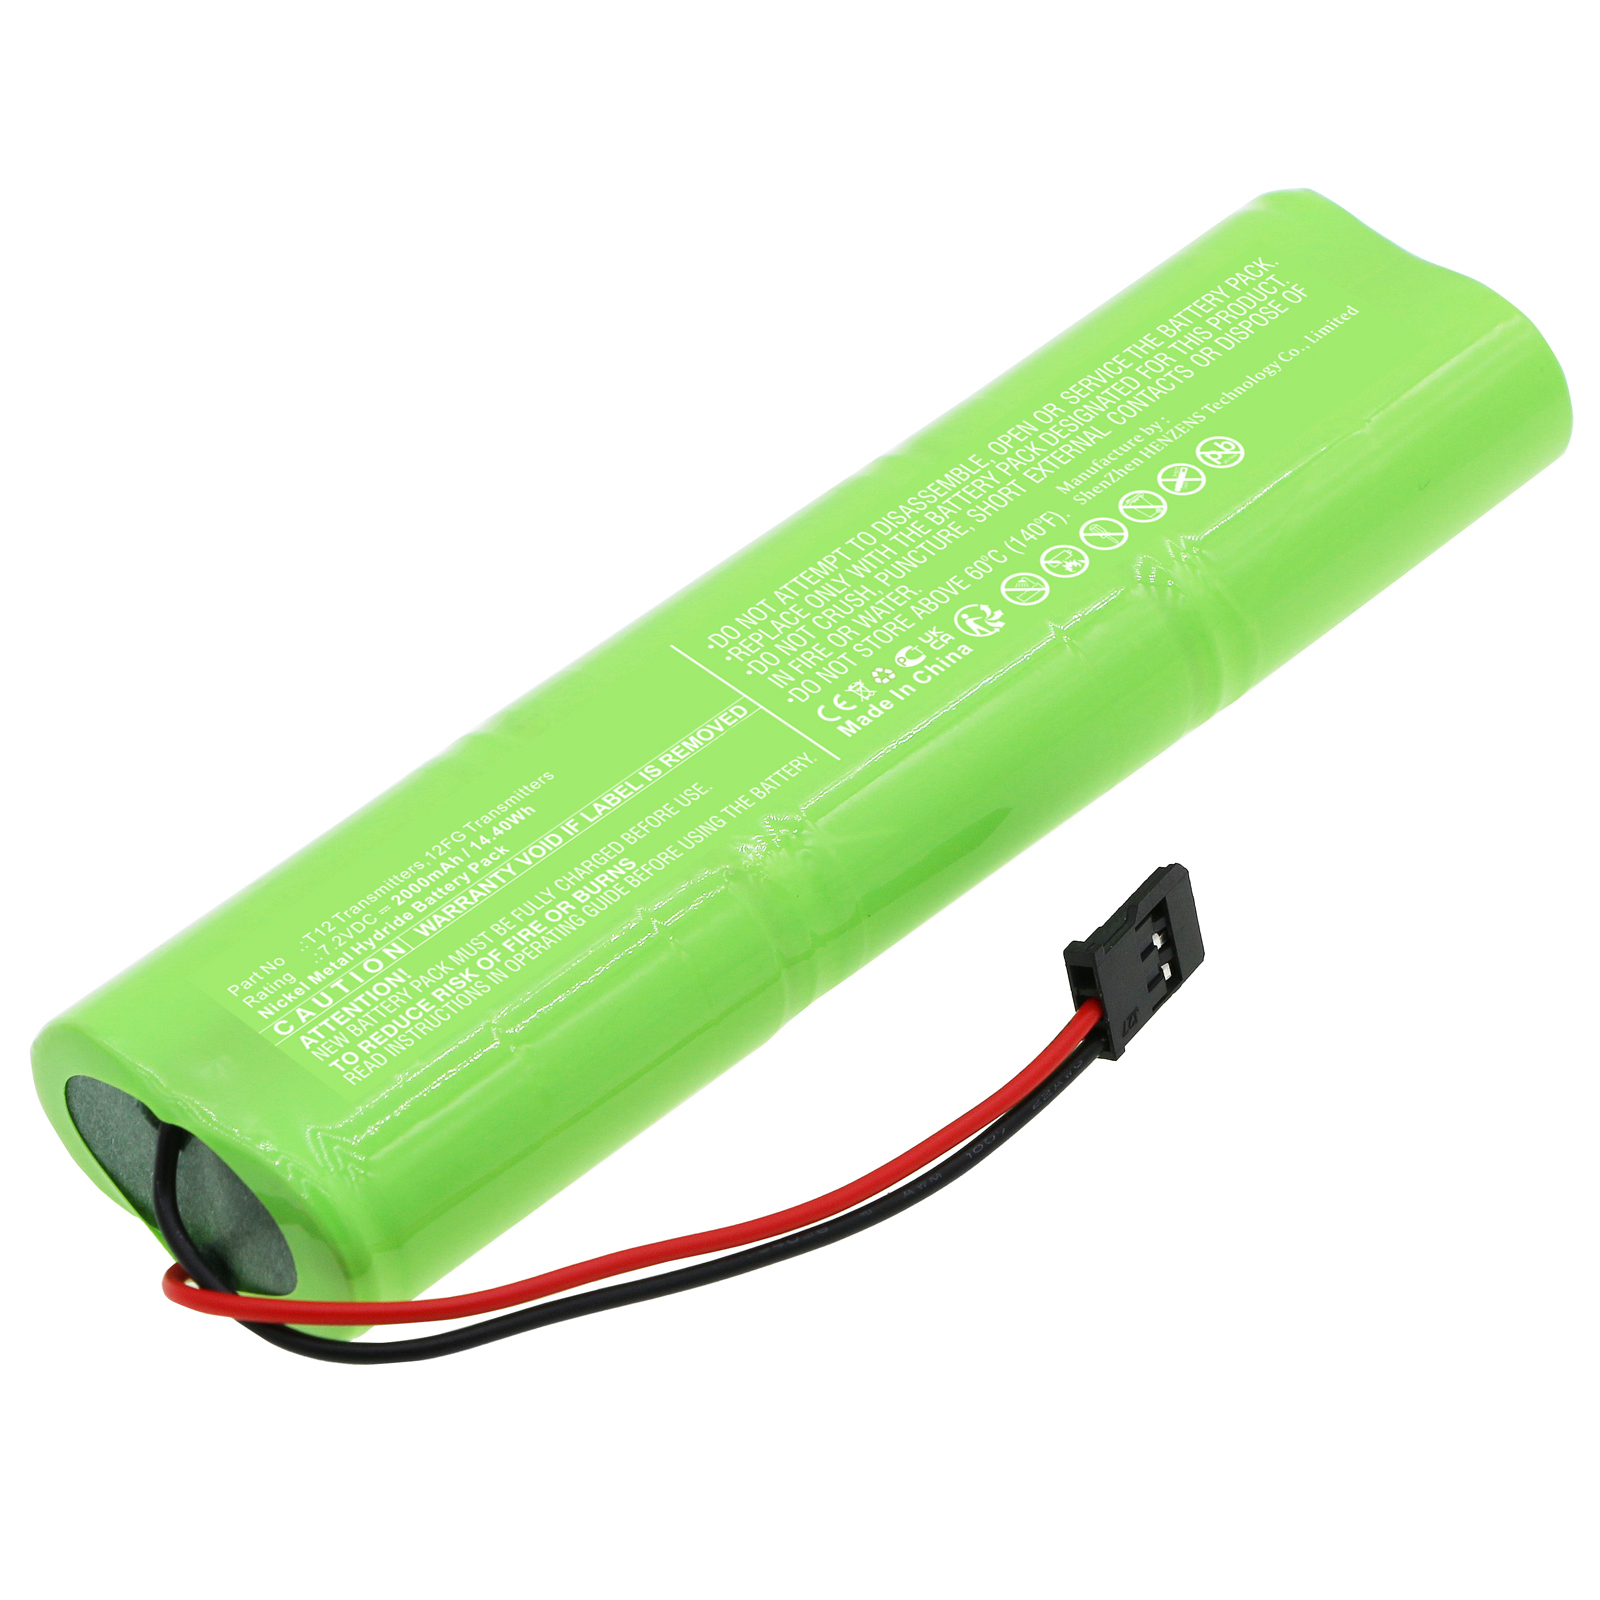 Synergy Digital Remote Control Battery, Compatible with Futaba HT6F1800B Remote Control Battery (Ni-MH, 7.2V, 2000mAh)